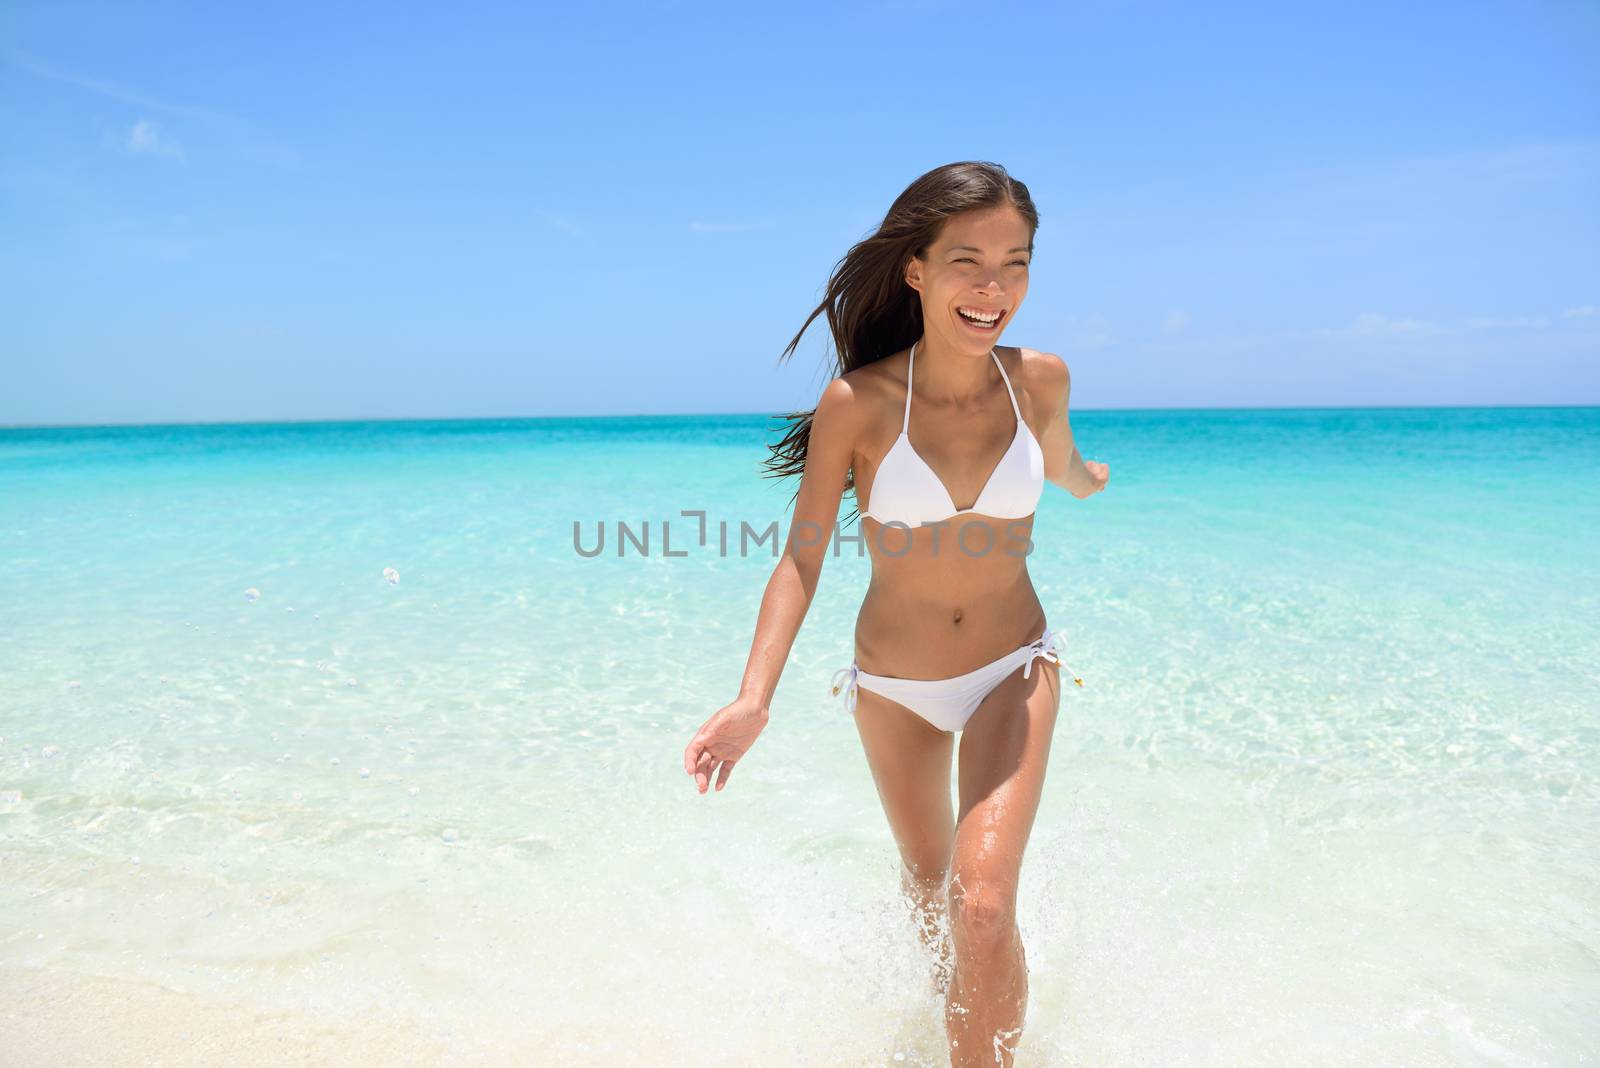 Cheerful Woman Running at Beach Summer Fun by Maridav